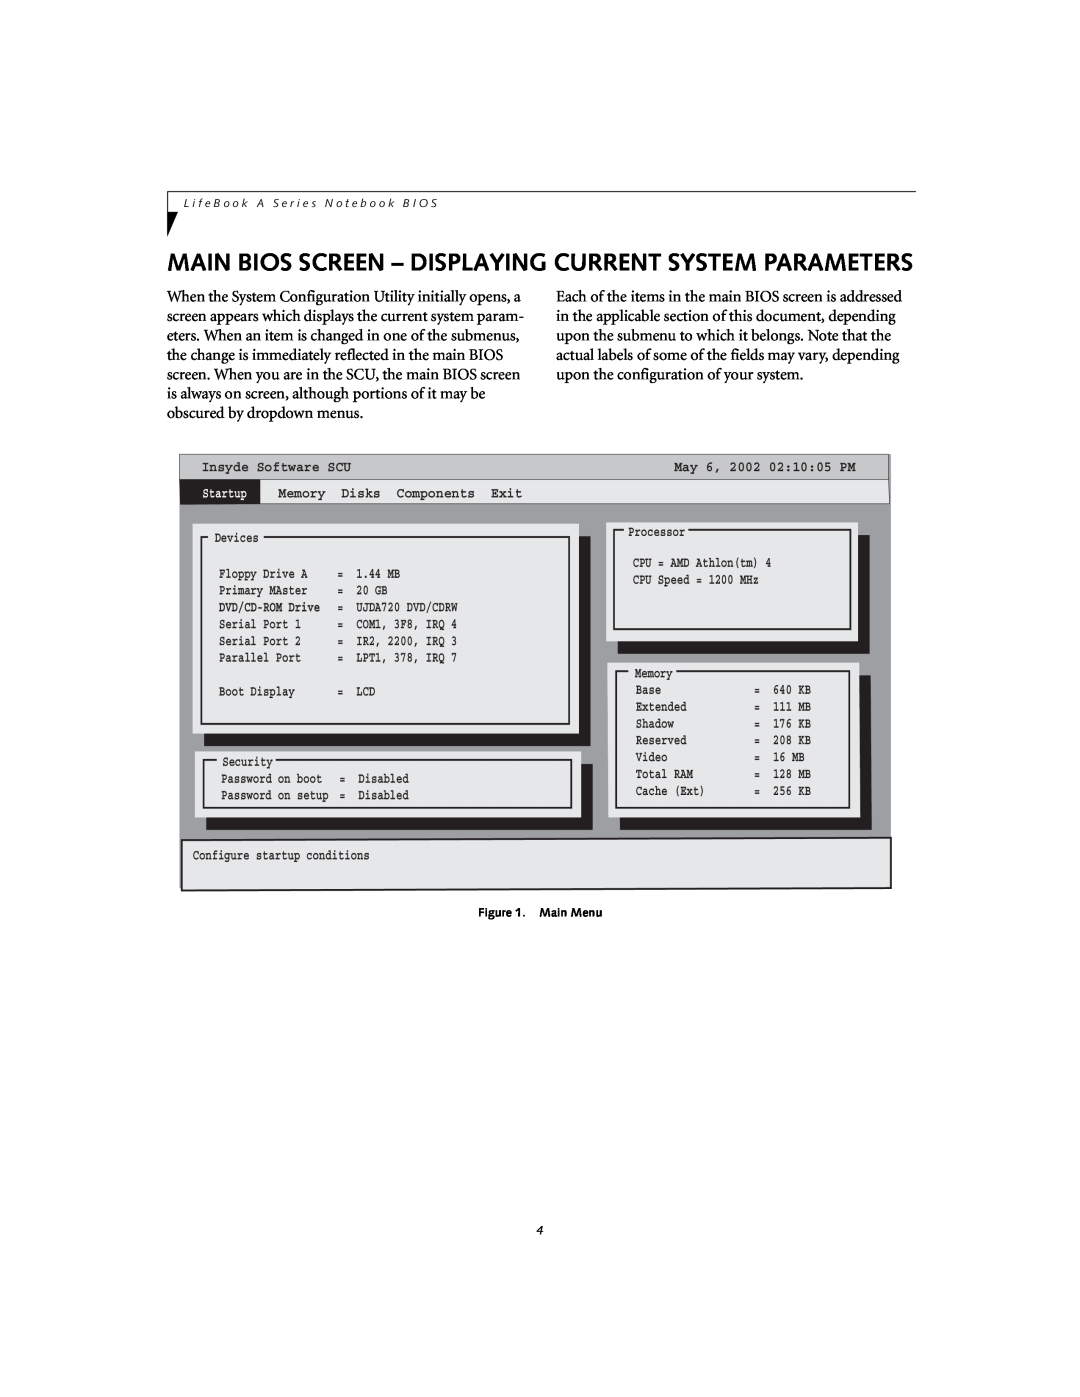 Fujitsu A1010 Main Bios Screen - Displaying Current System Parameters, May 6, 2002 021005 PM, Memory, Disks Components 